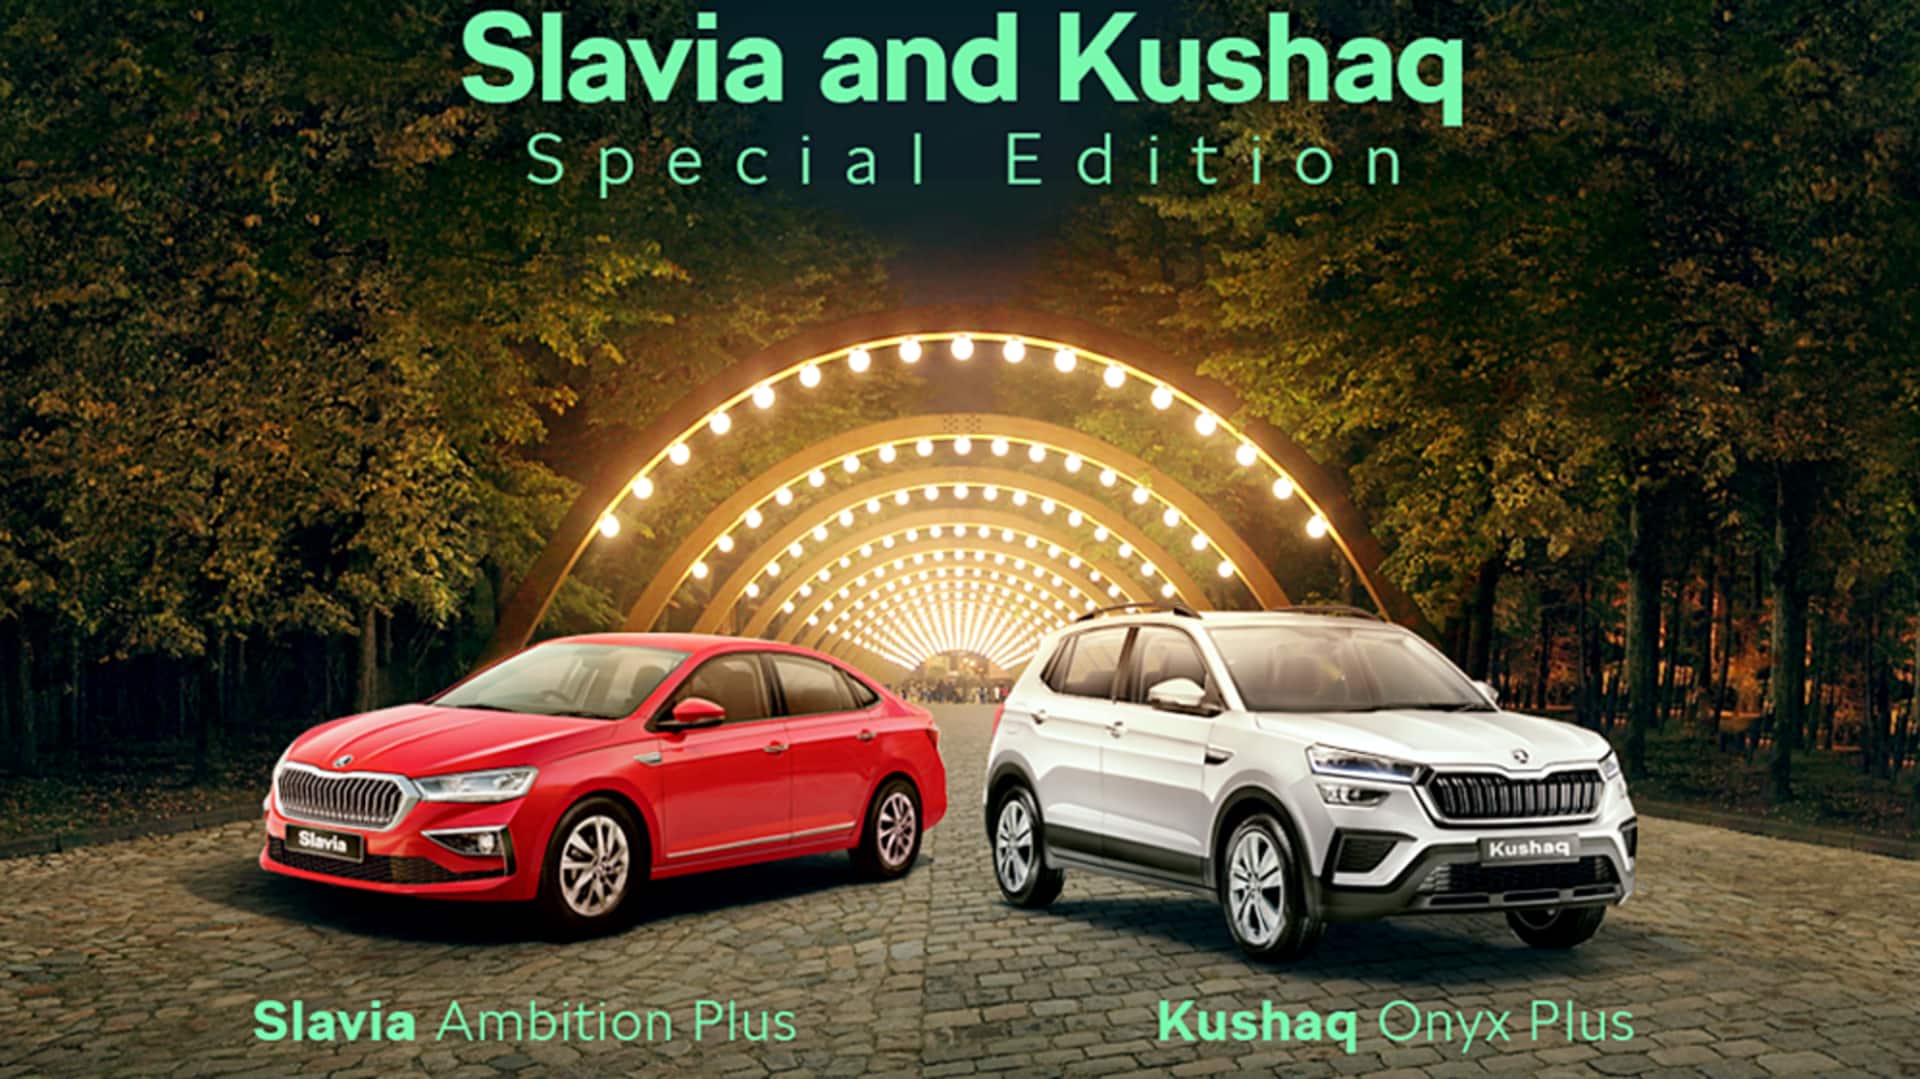 SKODA Kushaq Onyx Plus, Slavia Ambition Plus editions go official